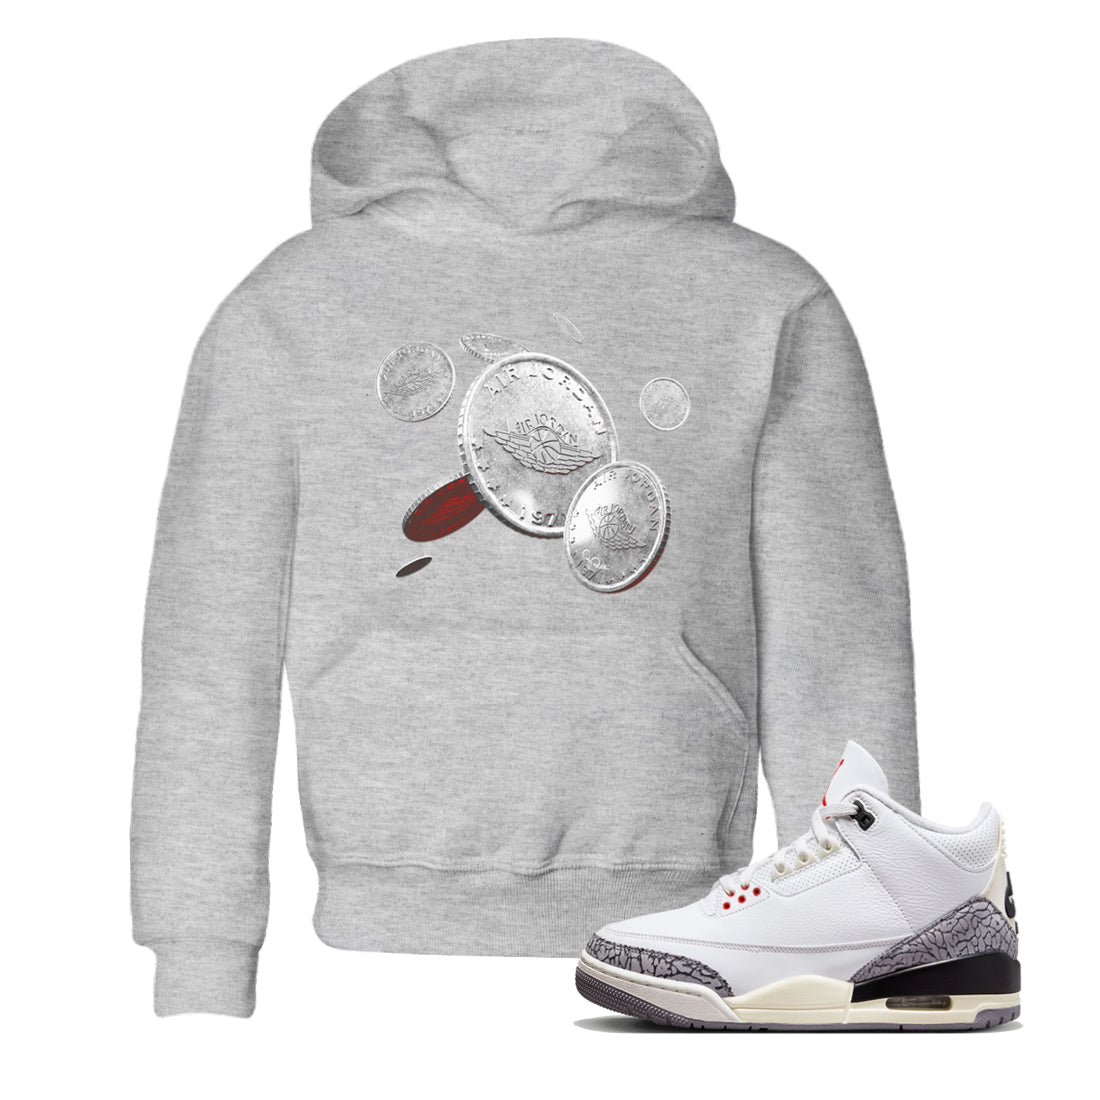 Air Jordan 3 White Cement Shirt To Match Jordans Coin Drop Sneaker Tees AJ3 White Cement Drip Gear Zone Sneaker Matching Clothing Kids Shirts Heather Grey 1